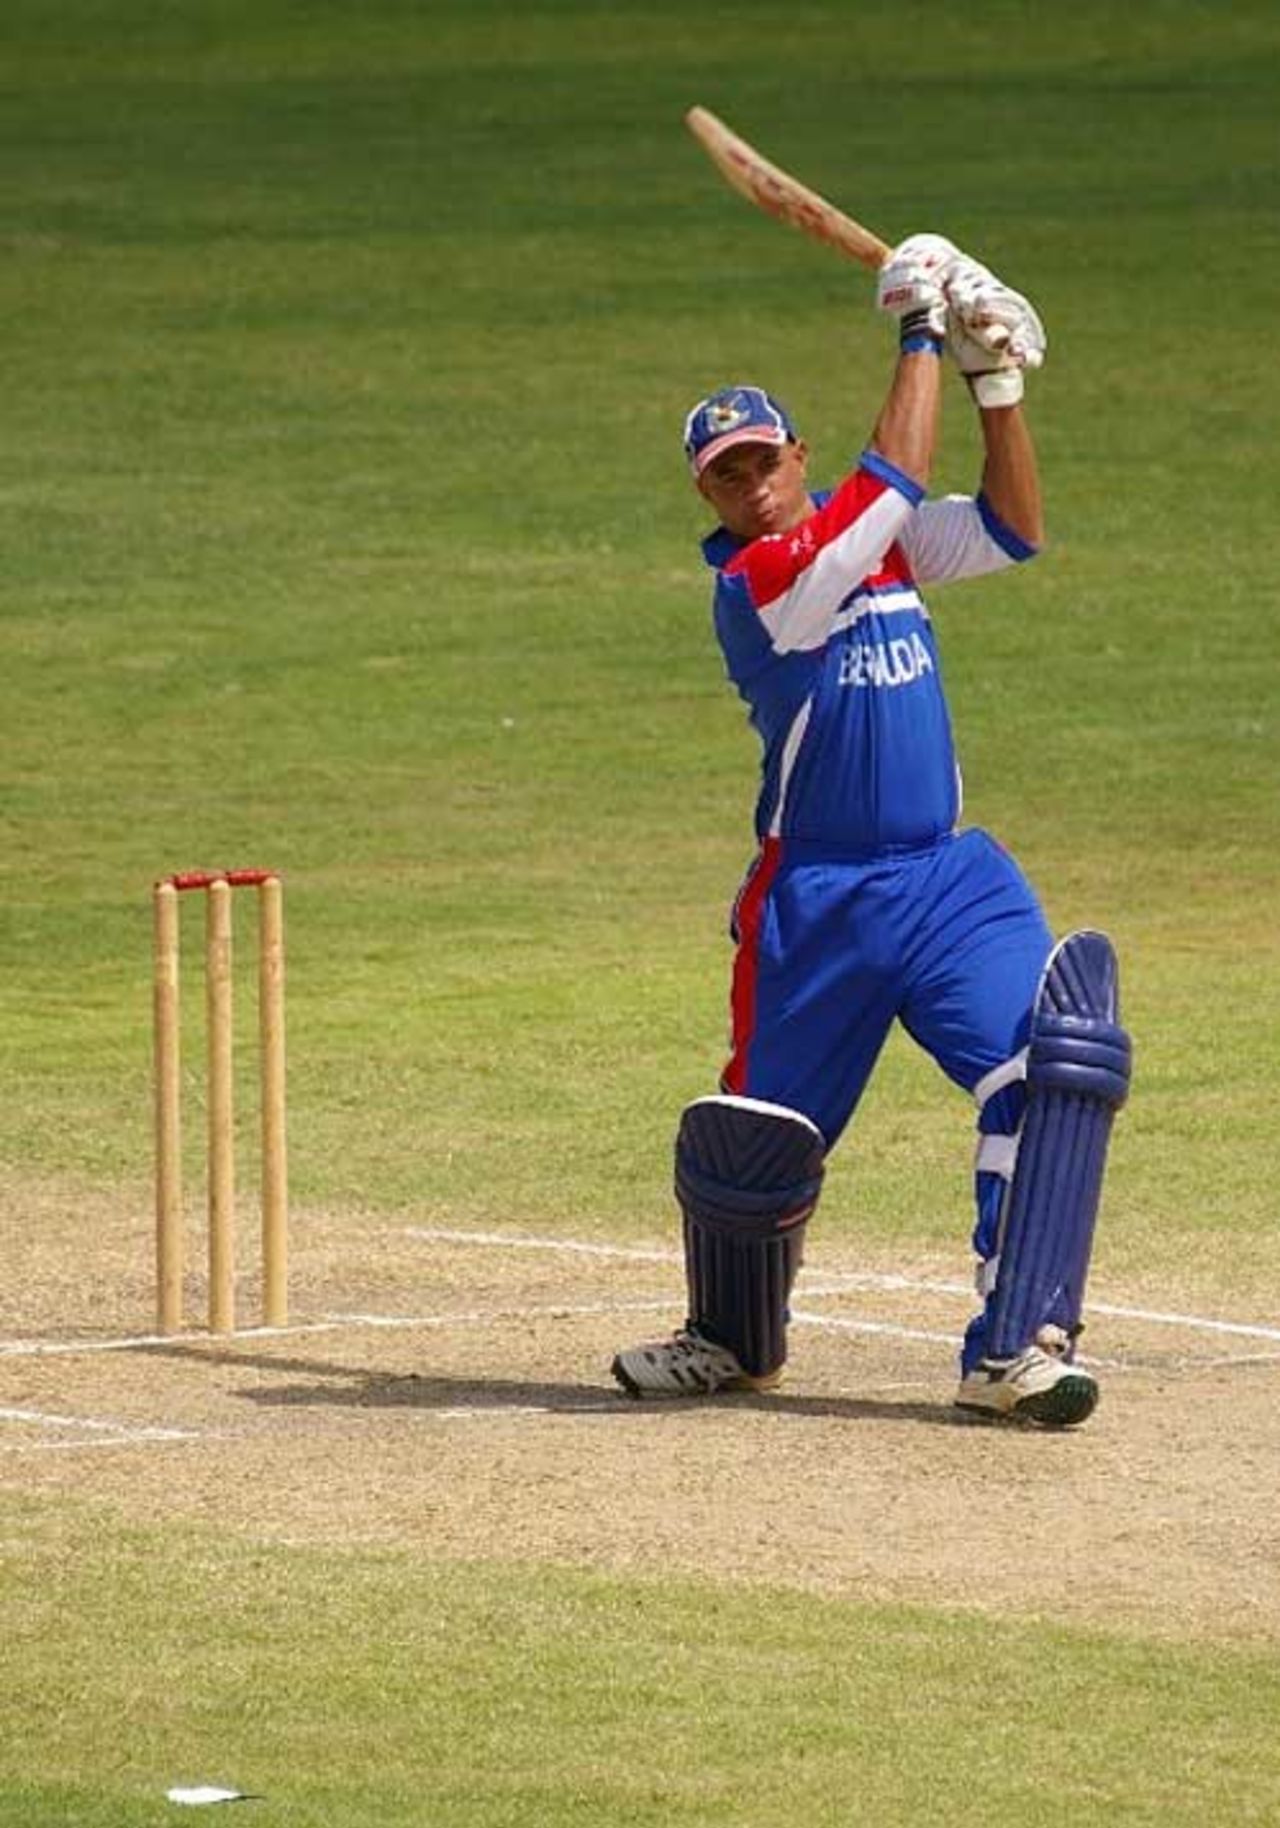 Lionel Cann boosted Bermuda with 33 off 23 balls, Bermuda v Bangladesh, ICC Tri-Series, Antigua, February 26, 2007